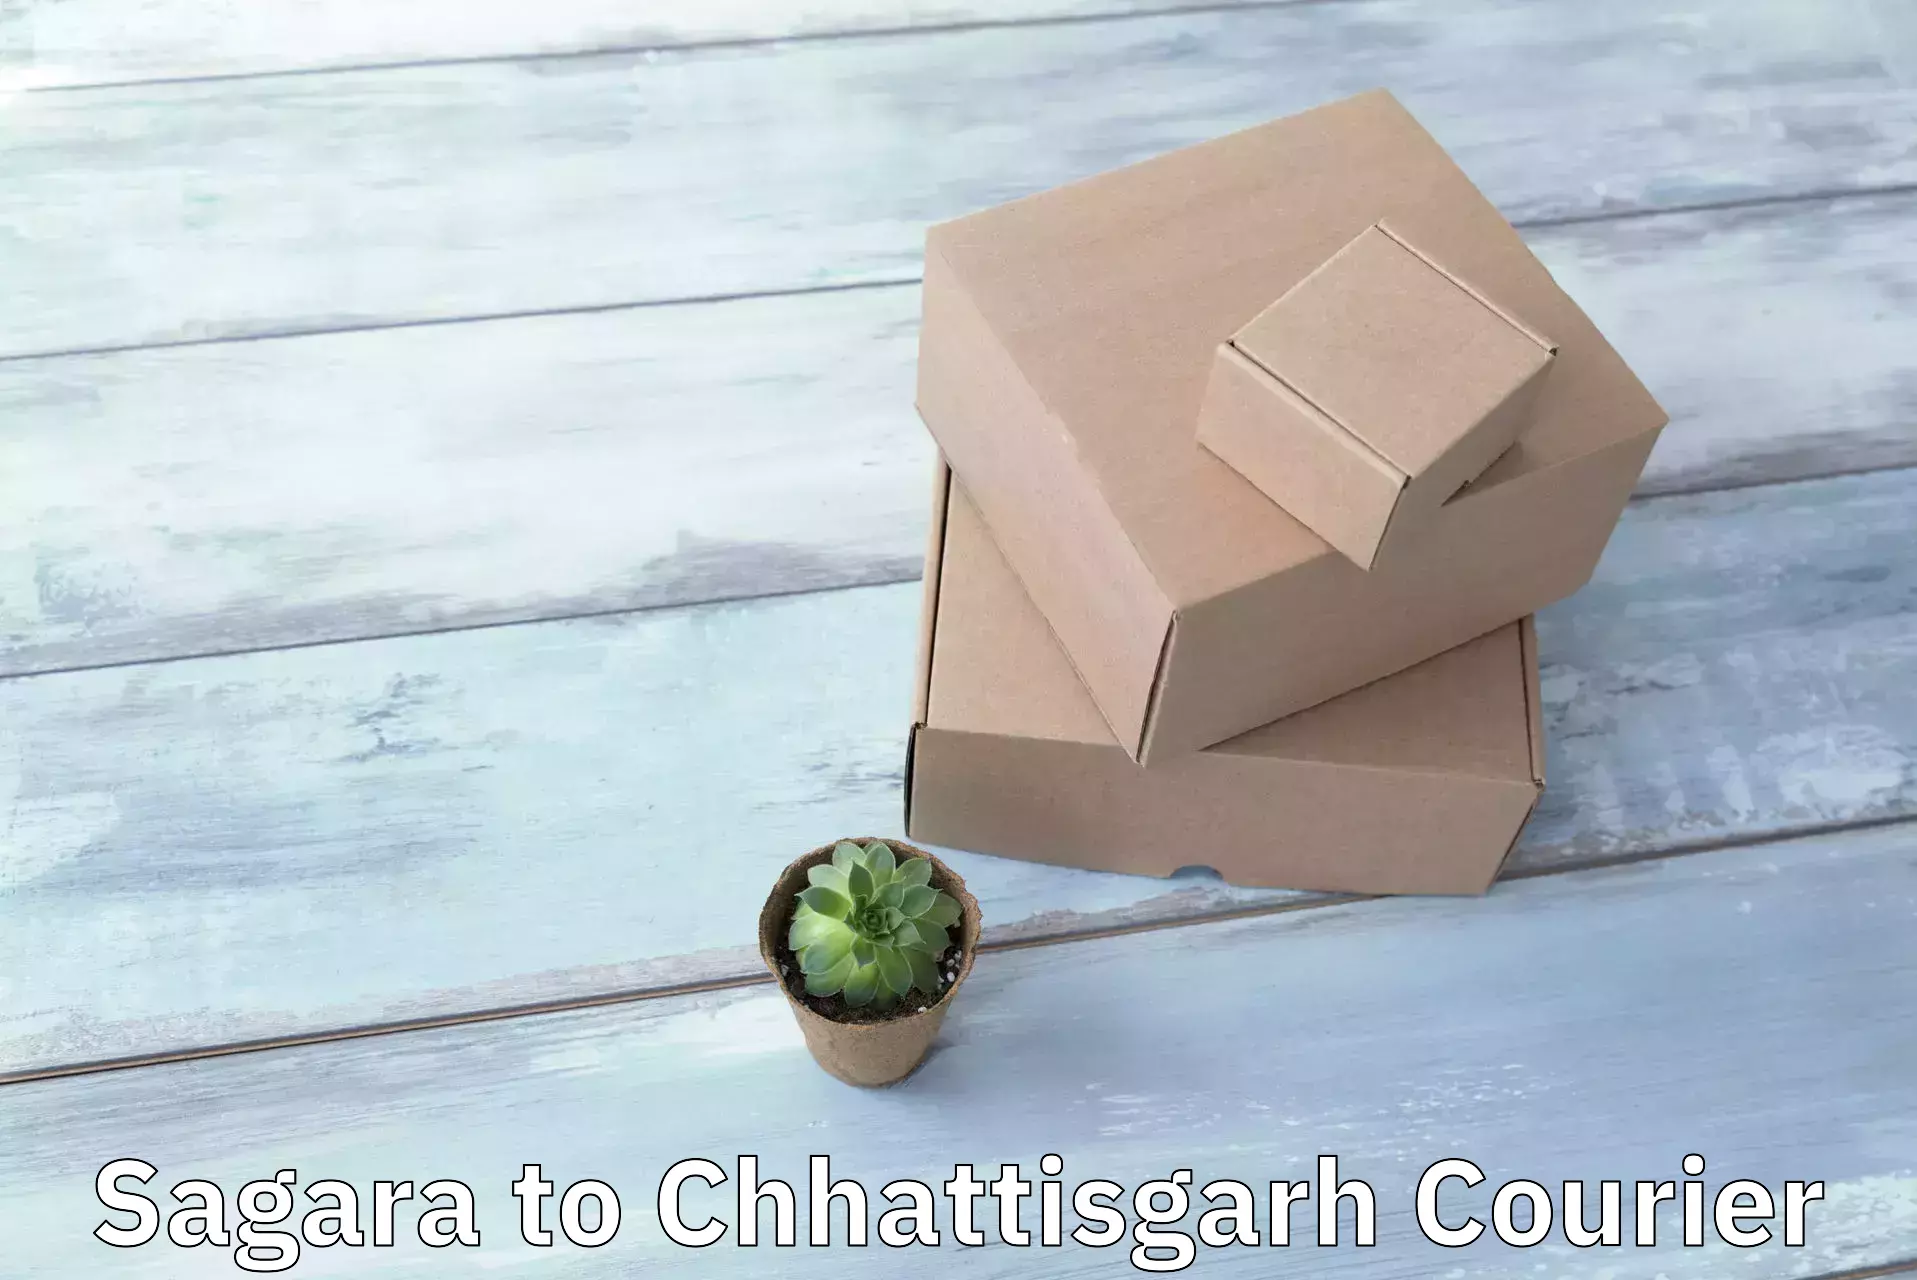 Efficient order fulfillment Sagara to Korea Chhattisgarh